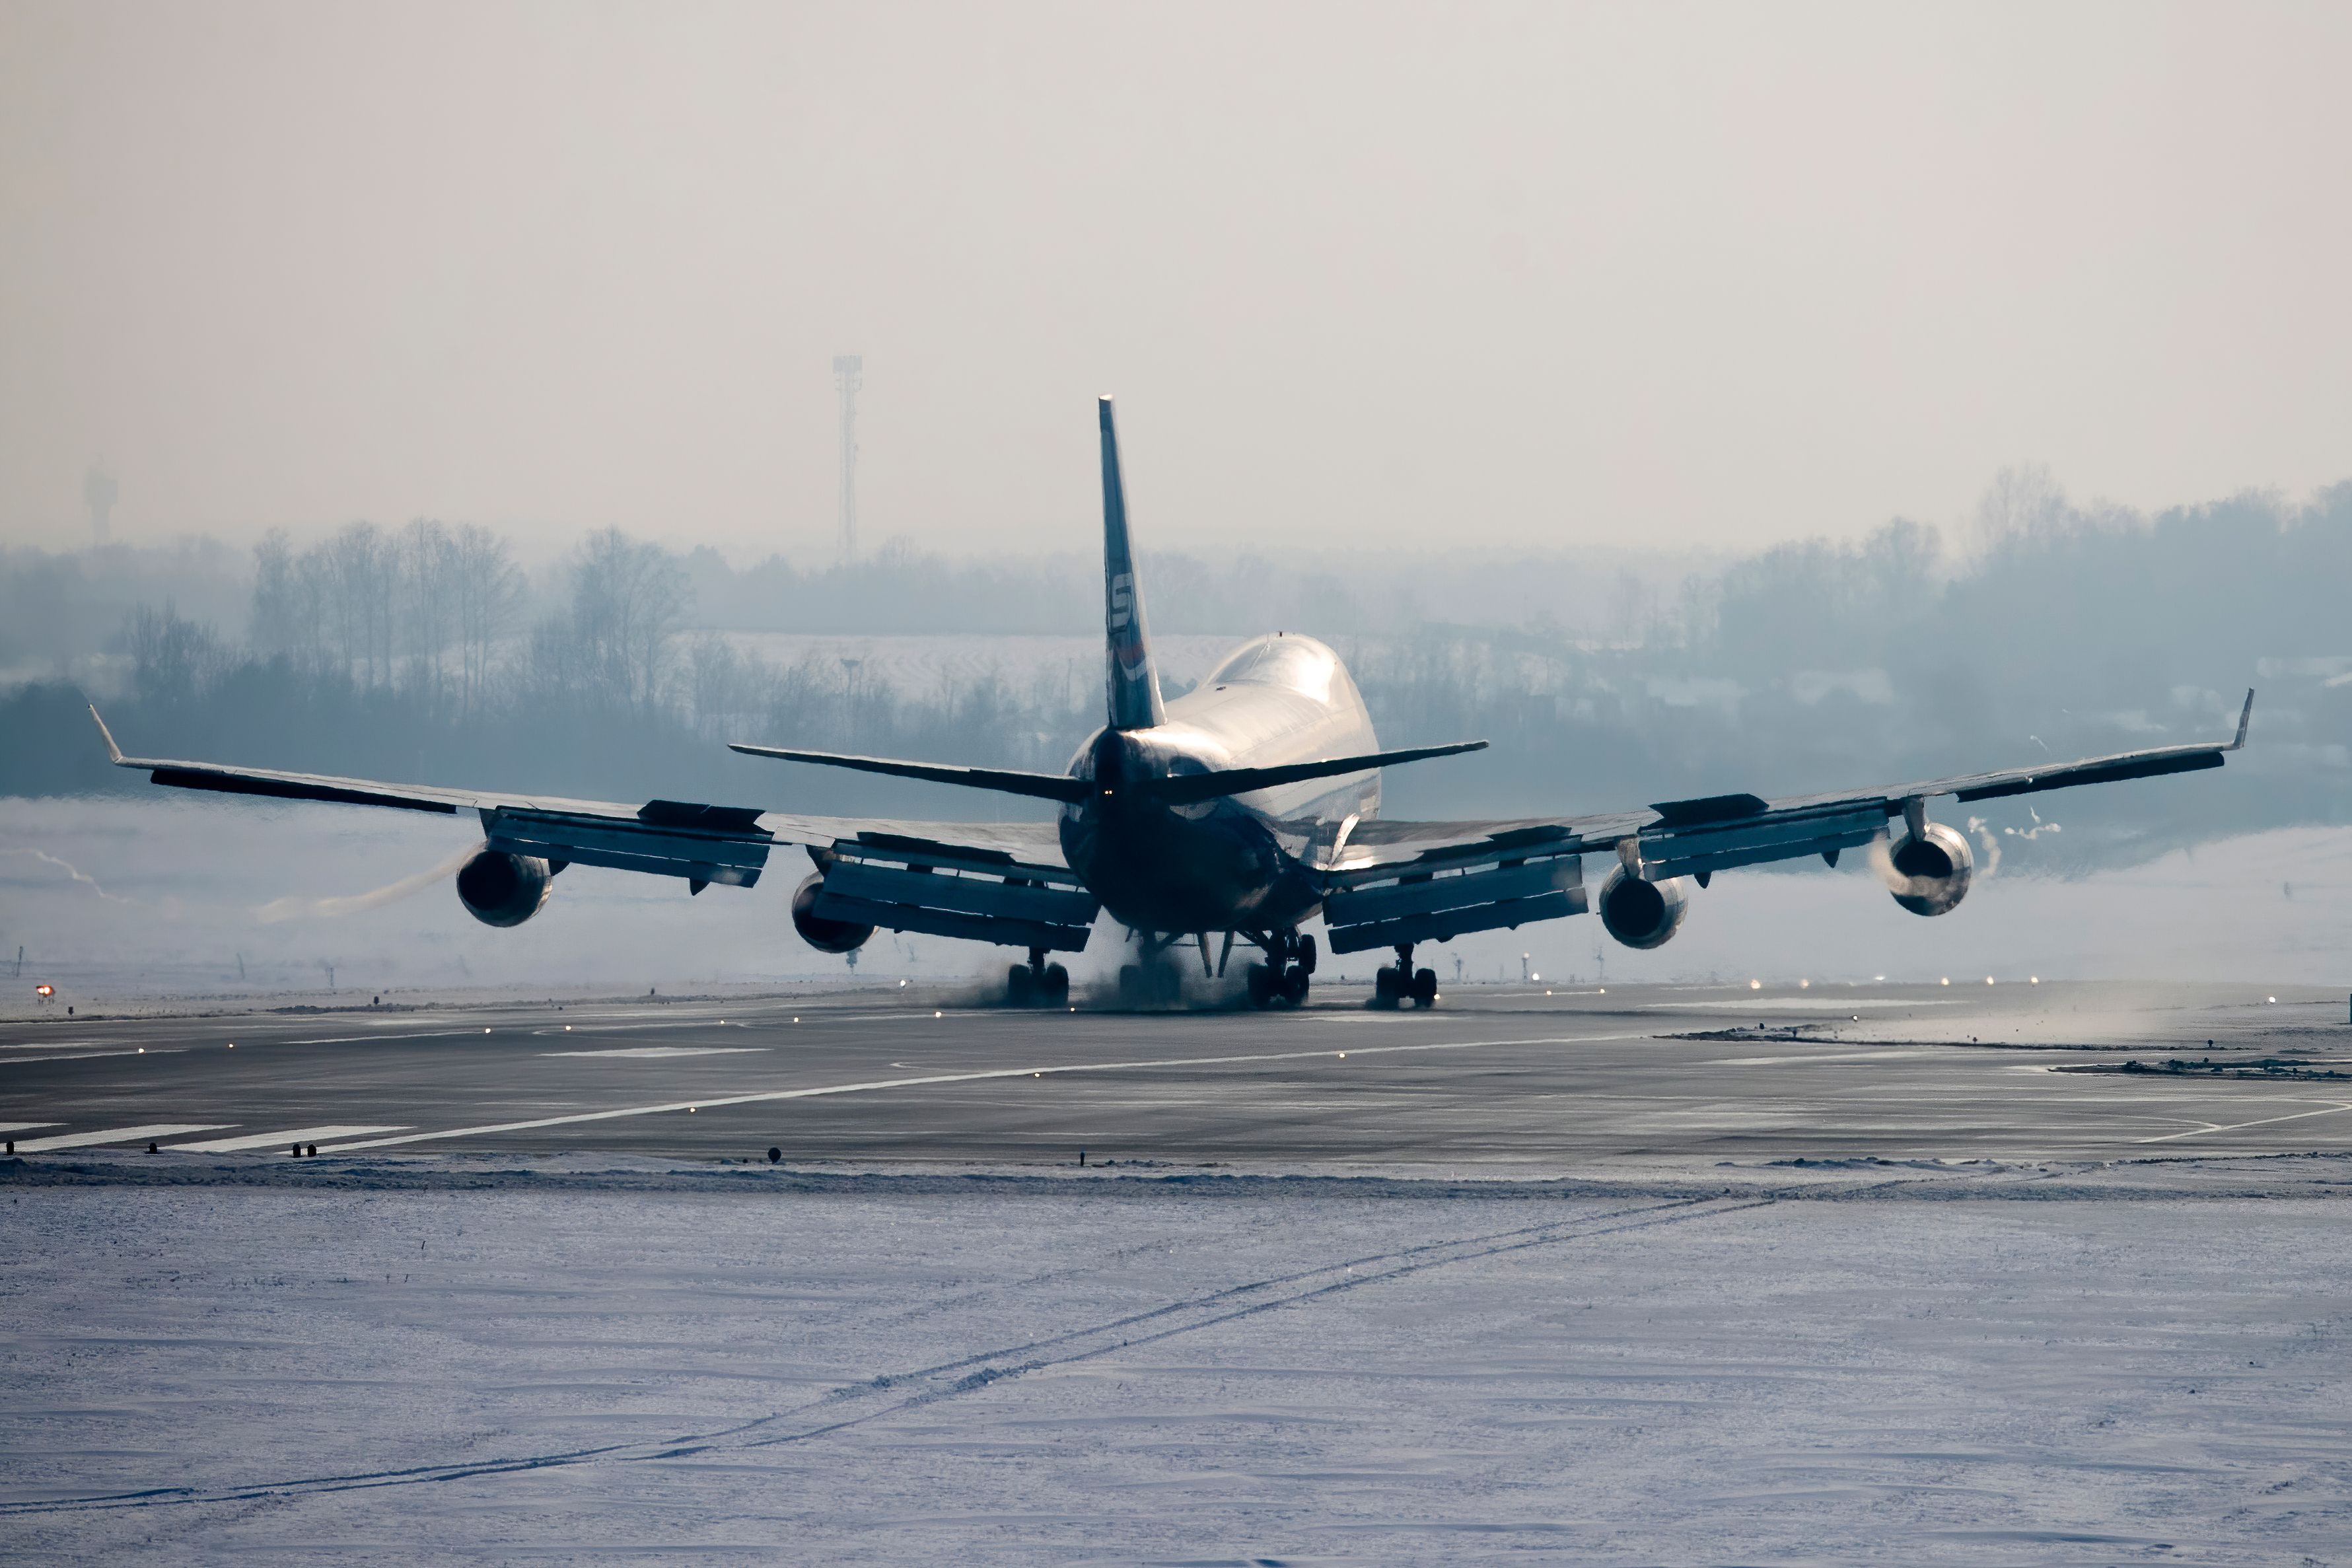 A Boeing 747 Landing on a snowy runway.